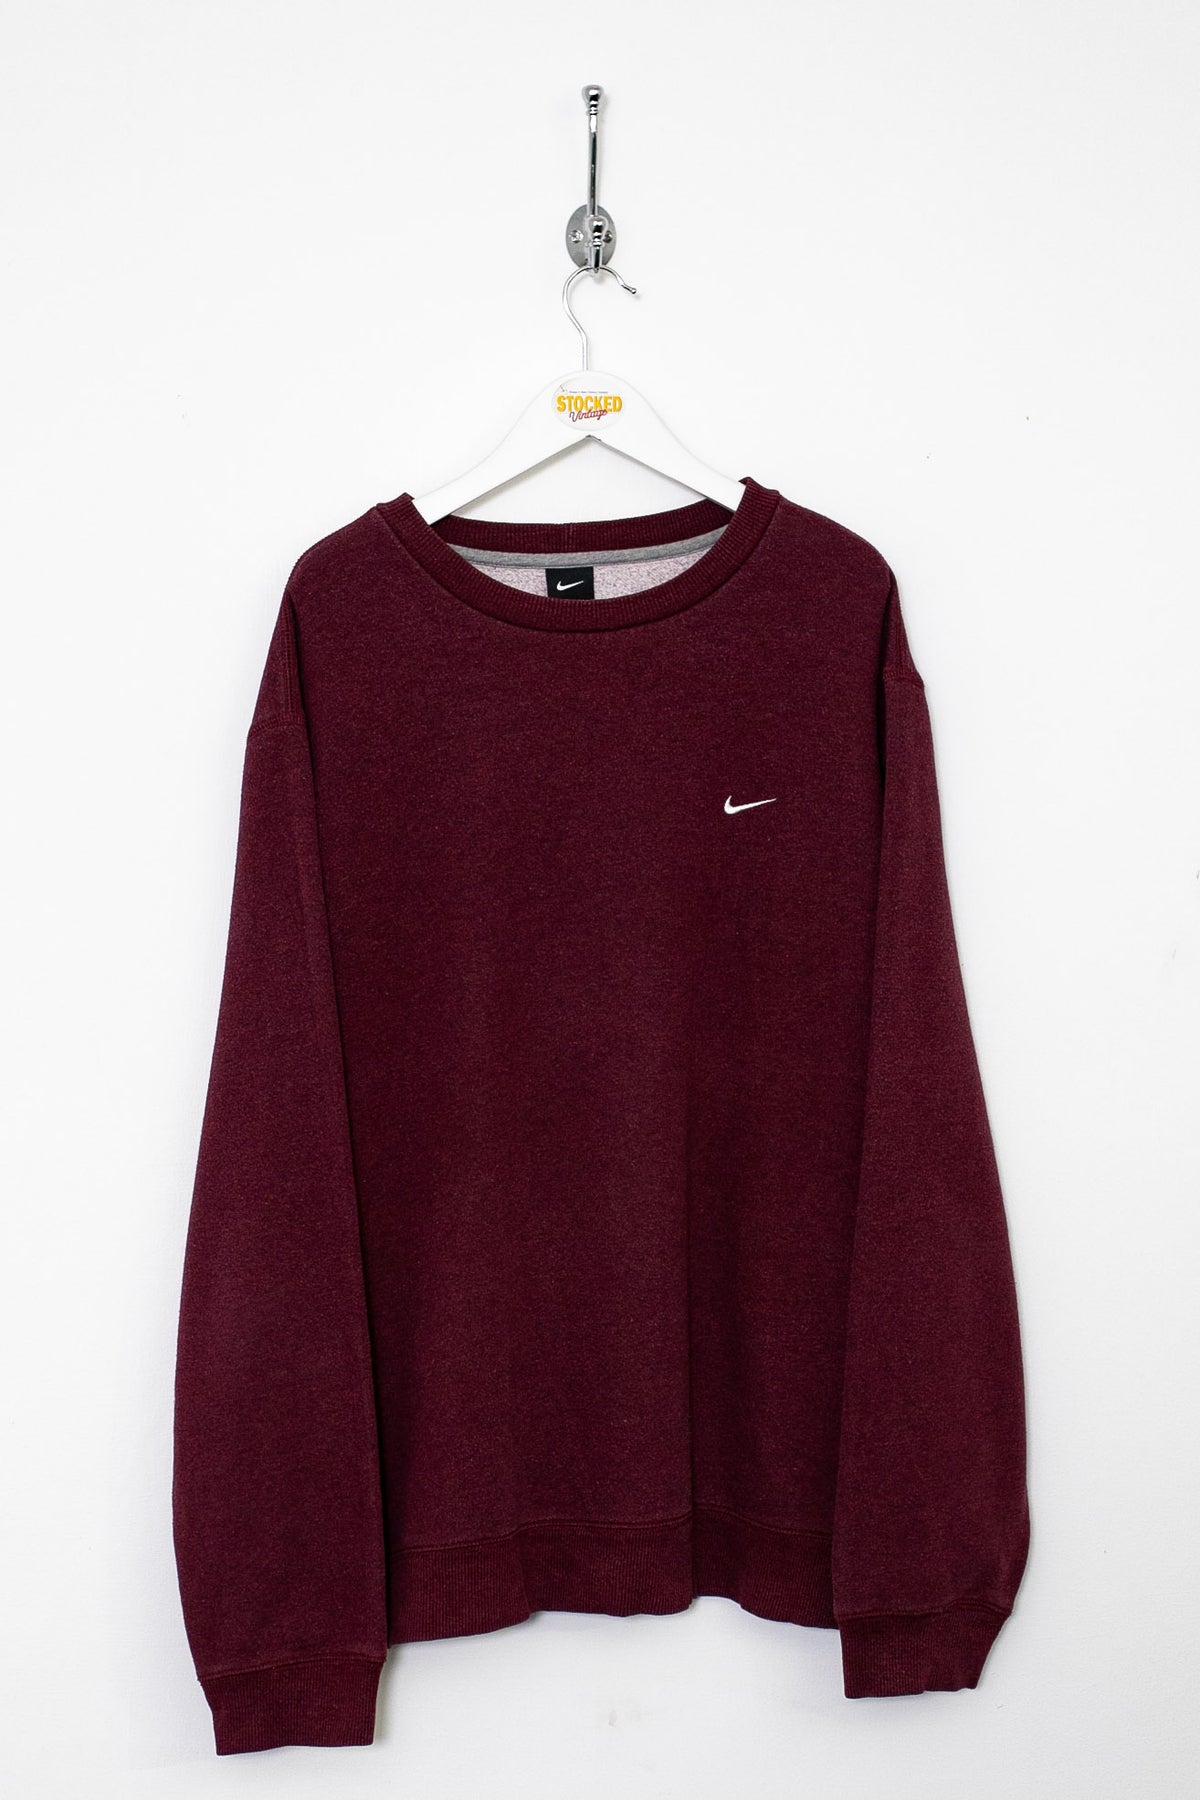 Nike Sweatshirt (XXL)